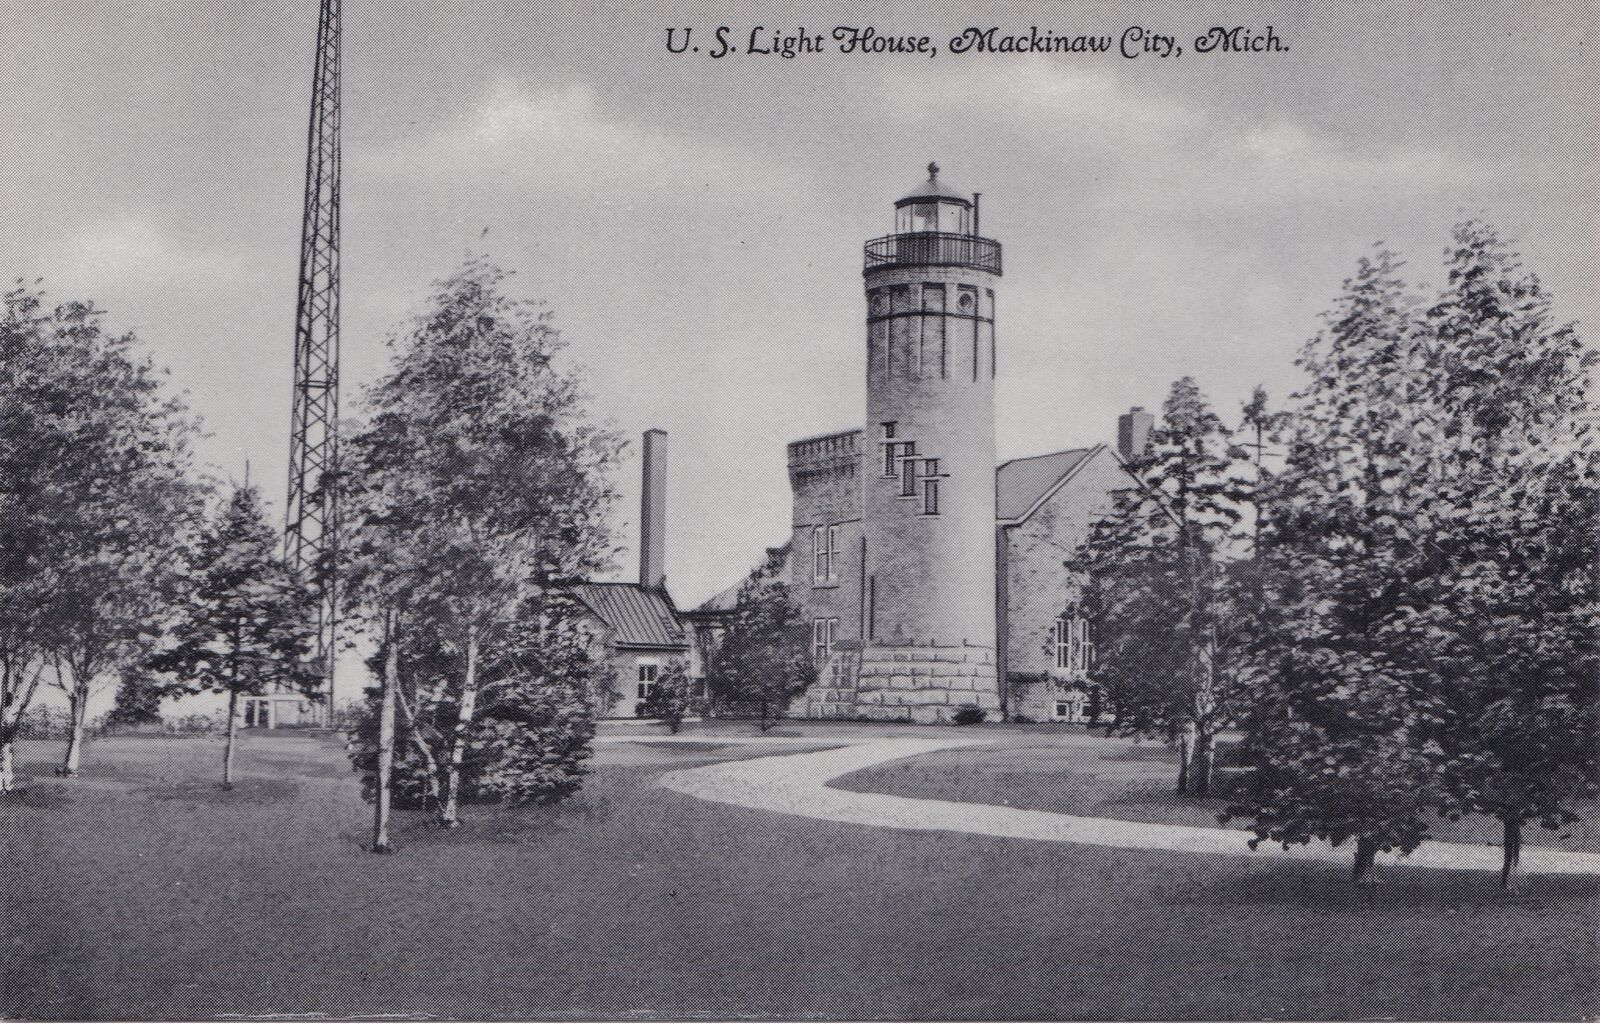 USCG Mackinaw City USCG LIGHTHOUSE built 1899 Mackinac Point Lighthouse Station